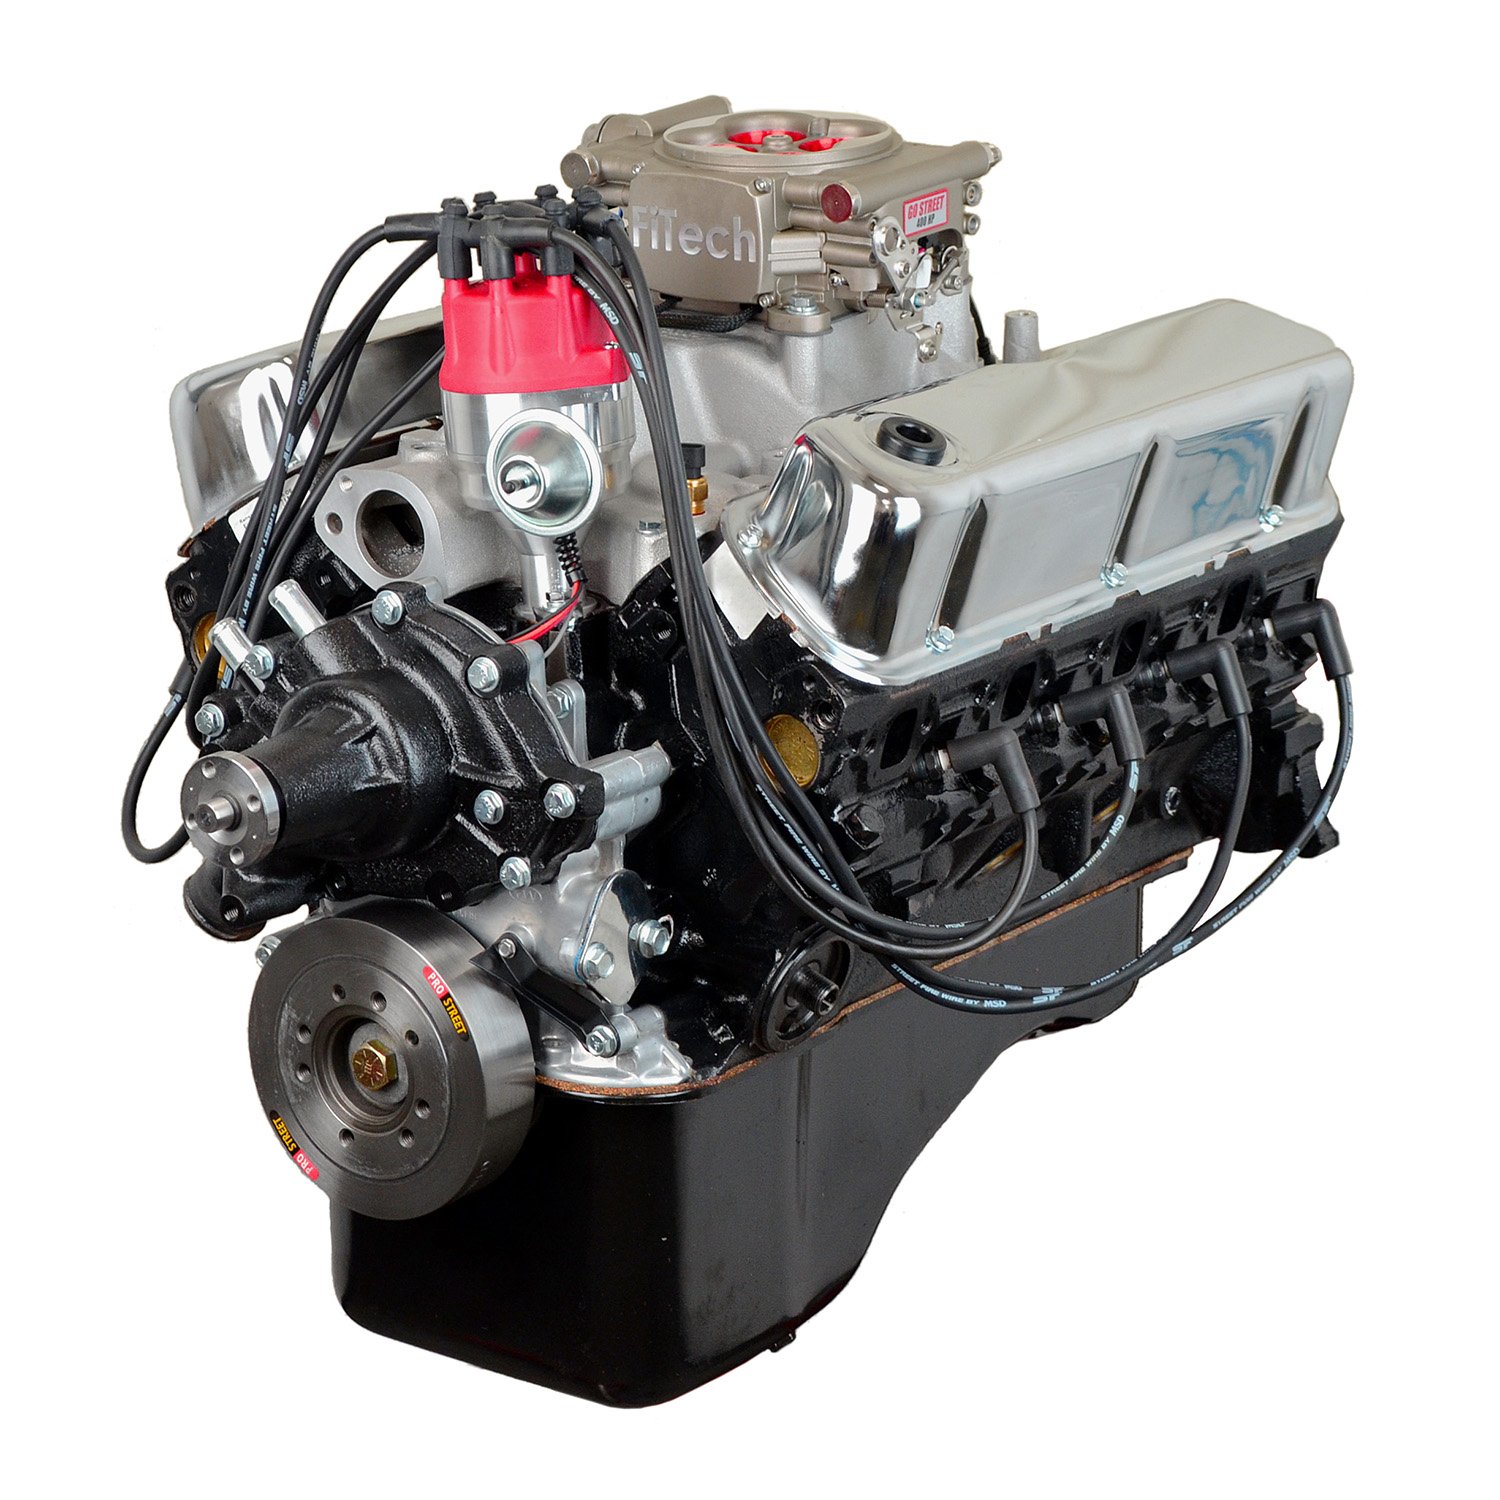 HP06C-EFI High Performance Crate Engine Small Block Ford 302ci / 300HP / 336TQ